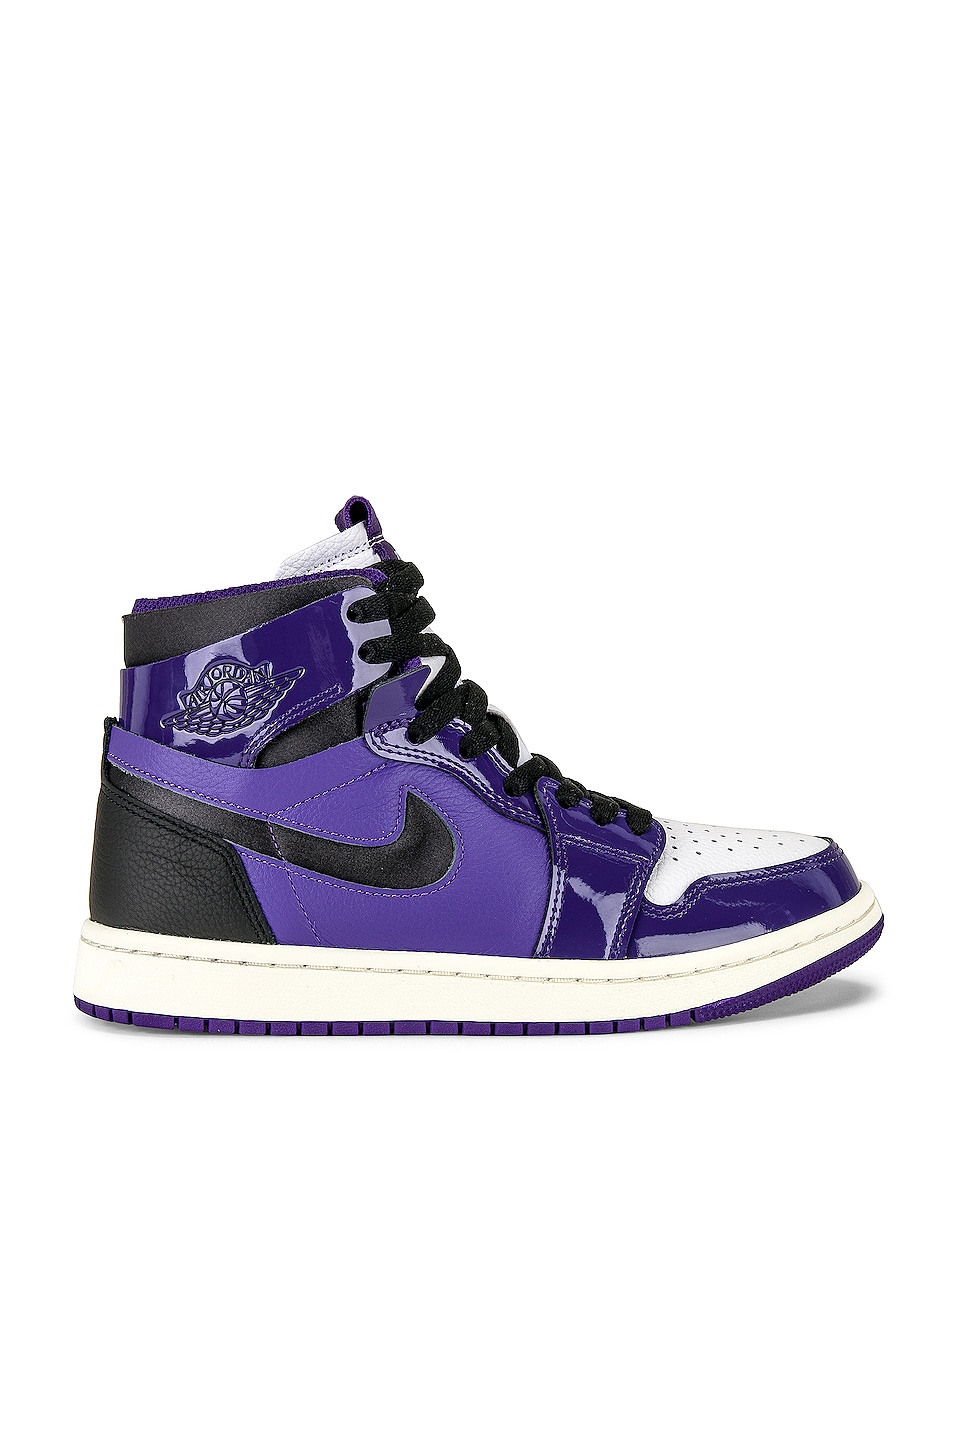 Jordan black and purple jordans 1 Air Jordan 1 Zoom Air Comfort in Court Purple, Purple